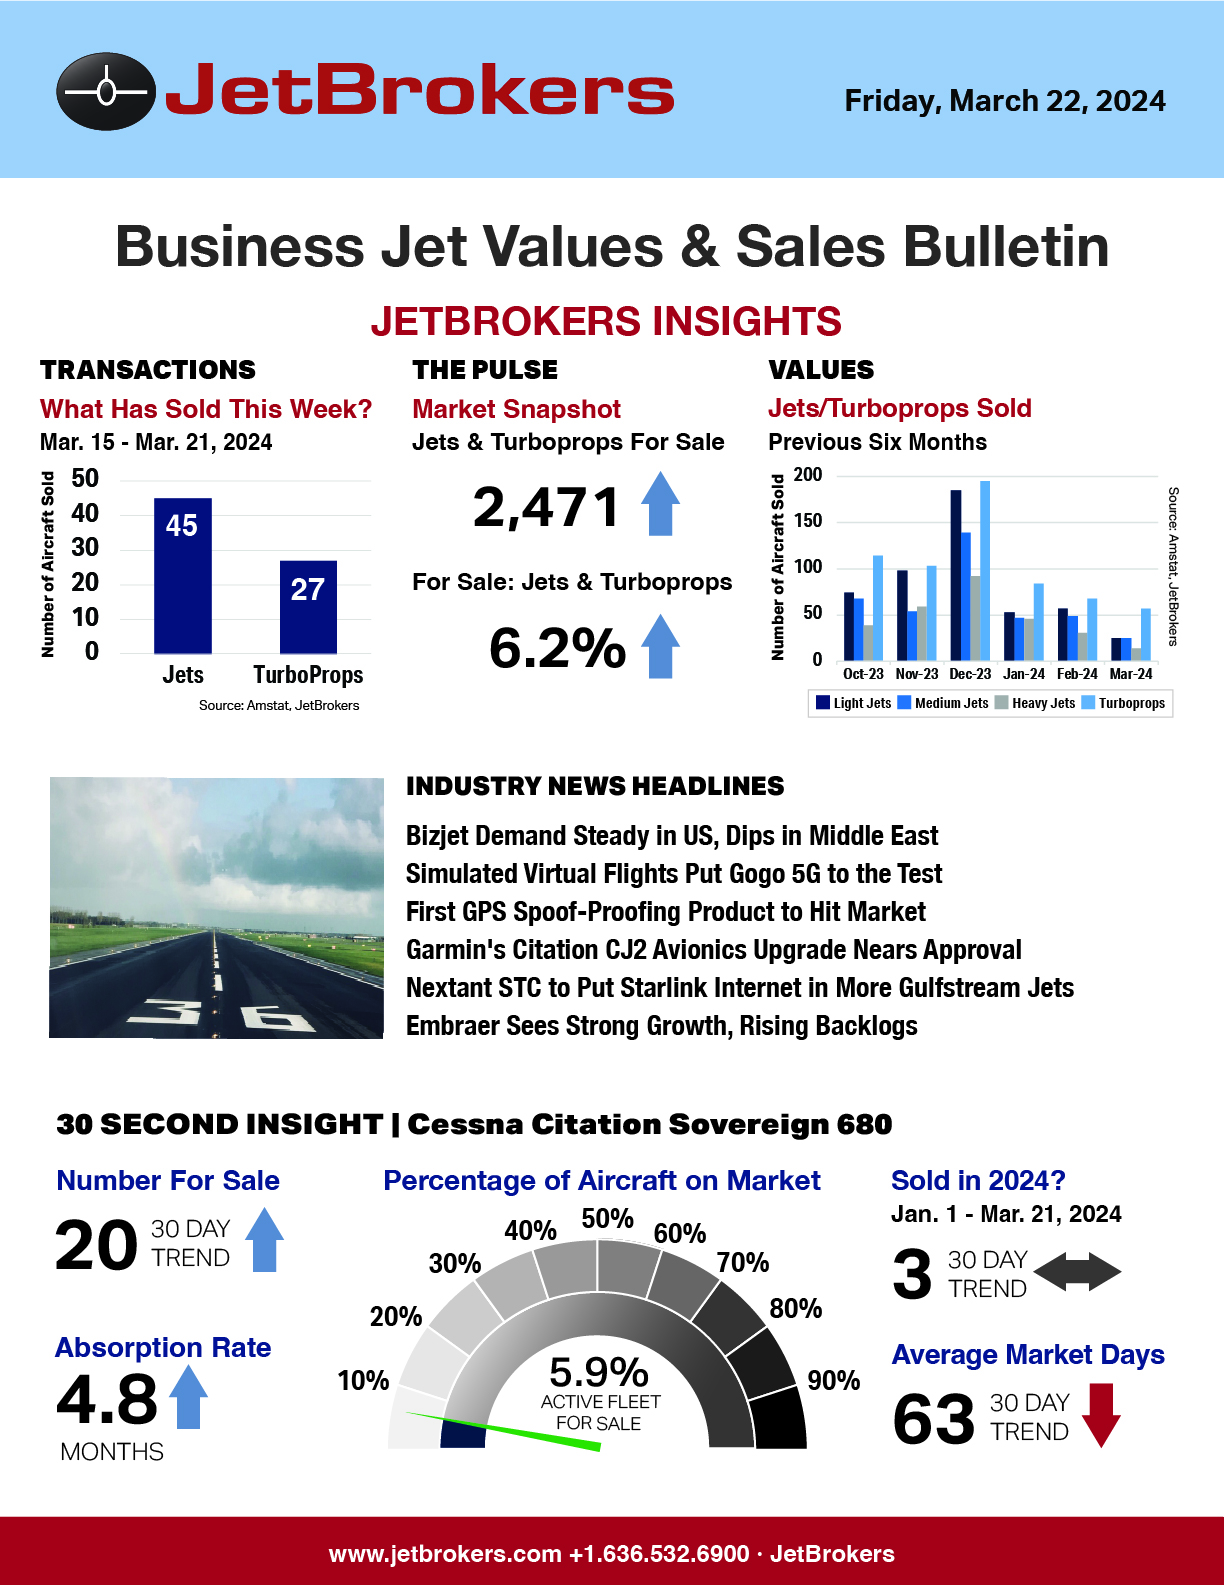 JetBrokers Business Jet Values & Sales Bulletin - March 22, 2024